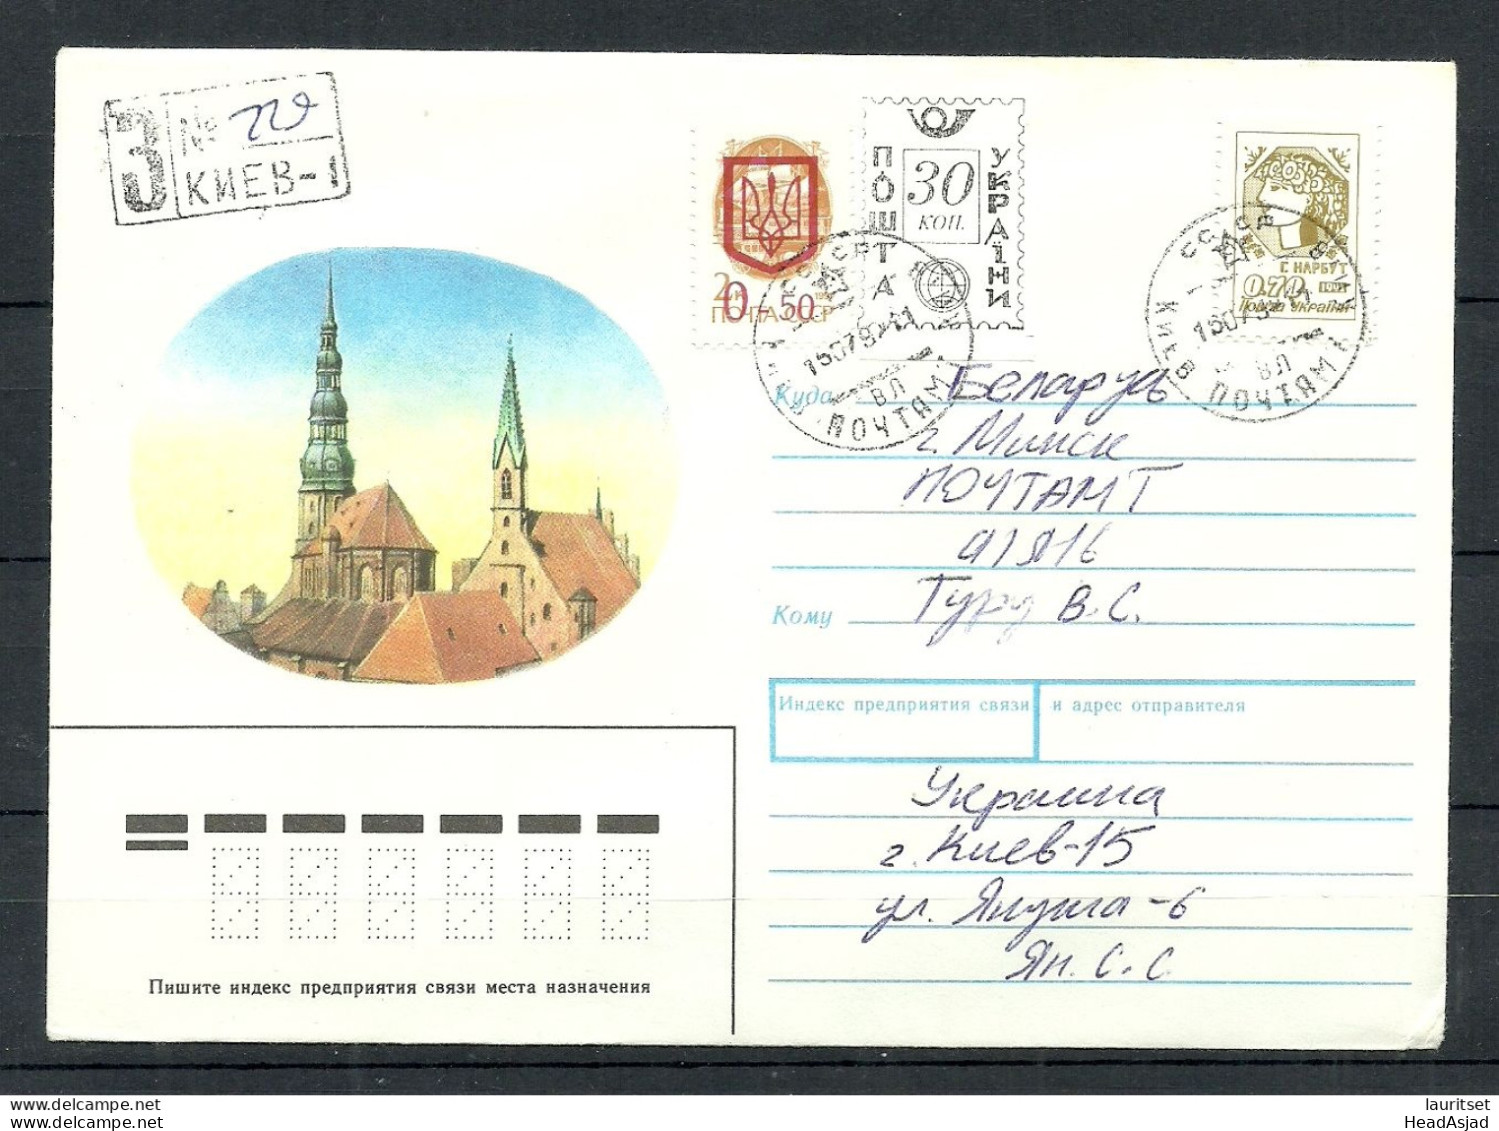 UKRAINE UKRAINA 1993 Registered Cover O Kiev-1 To Belarus Nach Weissrussland - Ukraine